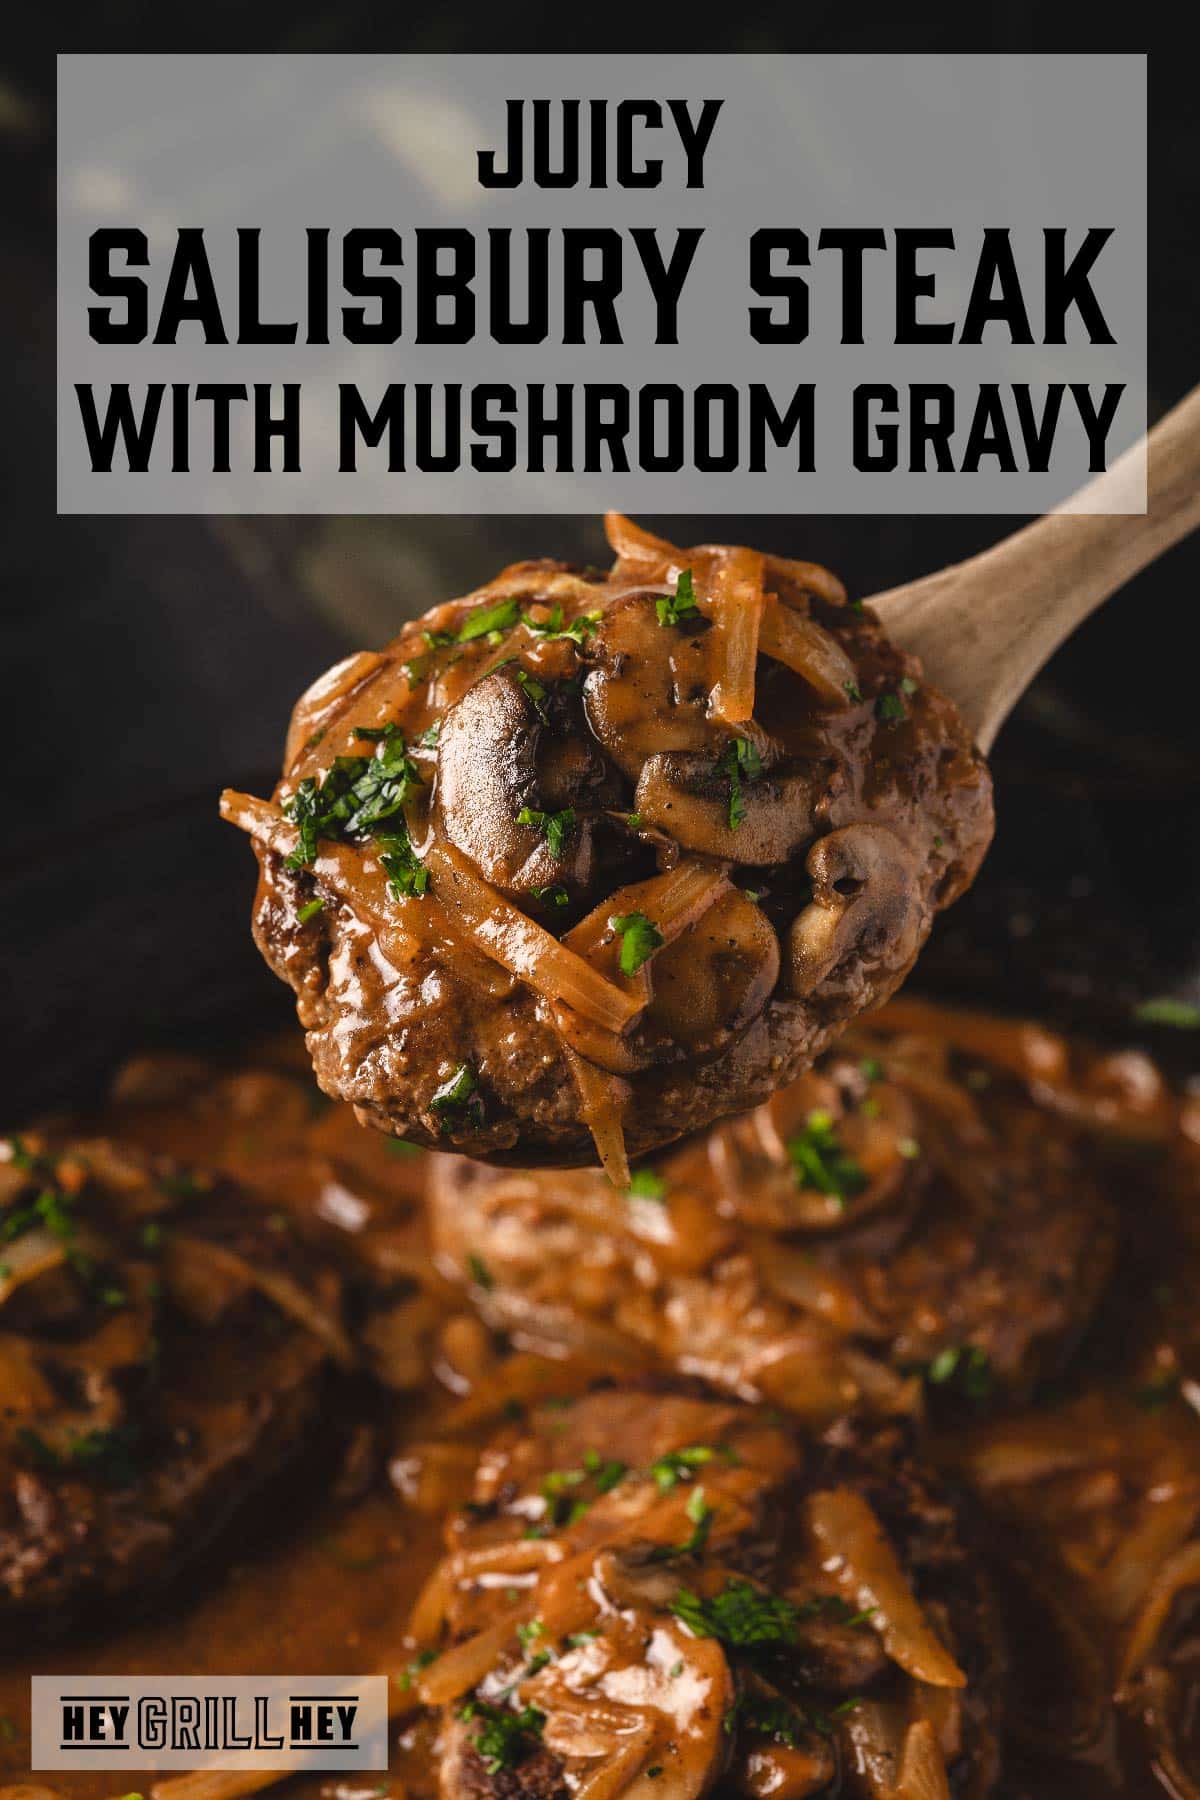 Salisbury steak on wooden spoon above serving dish. Text reads "Juicy Salisbury Steak with Mushroom Gravy".